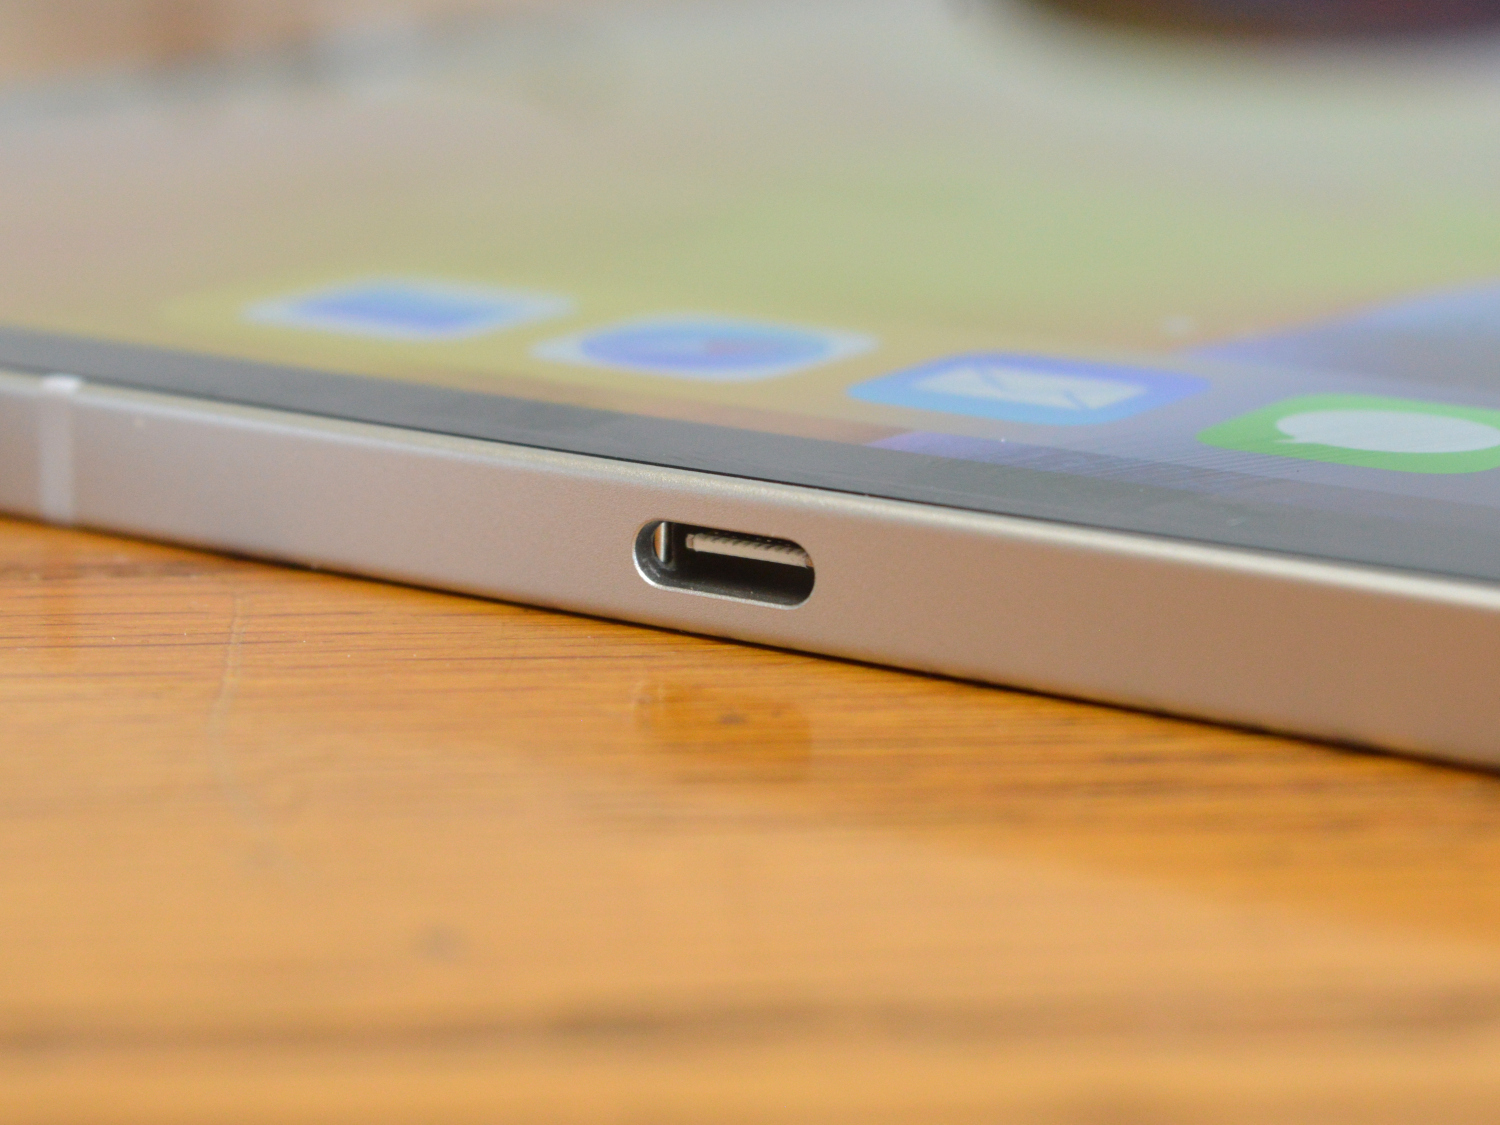 Apple iPad Pro charging port.